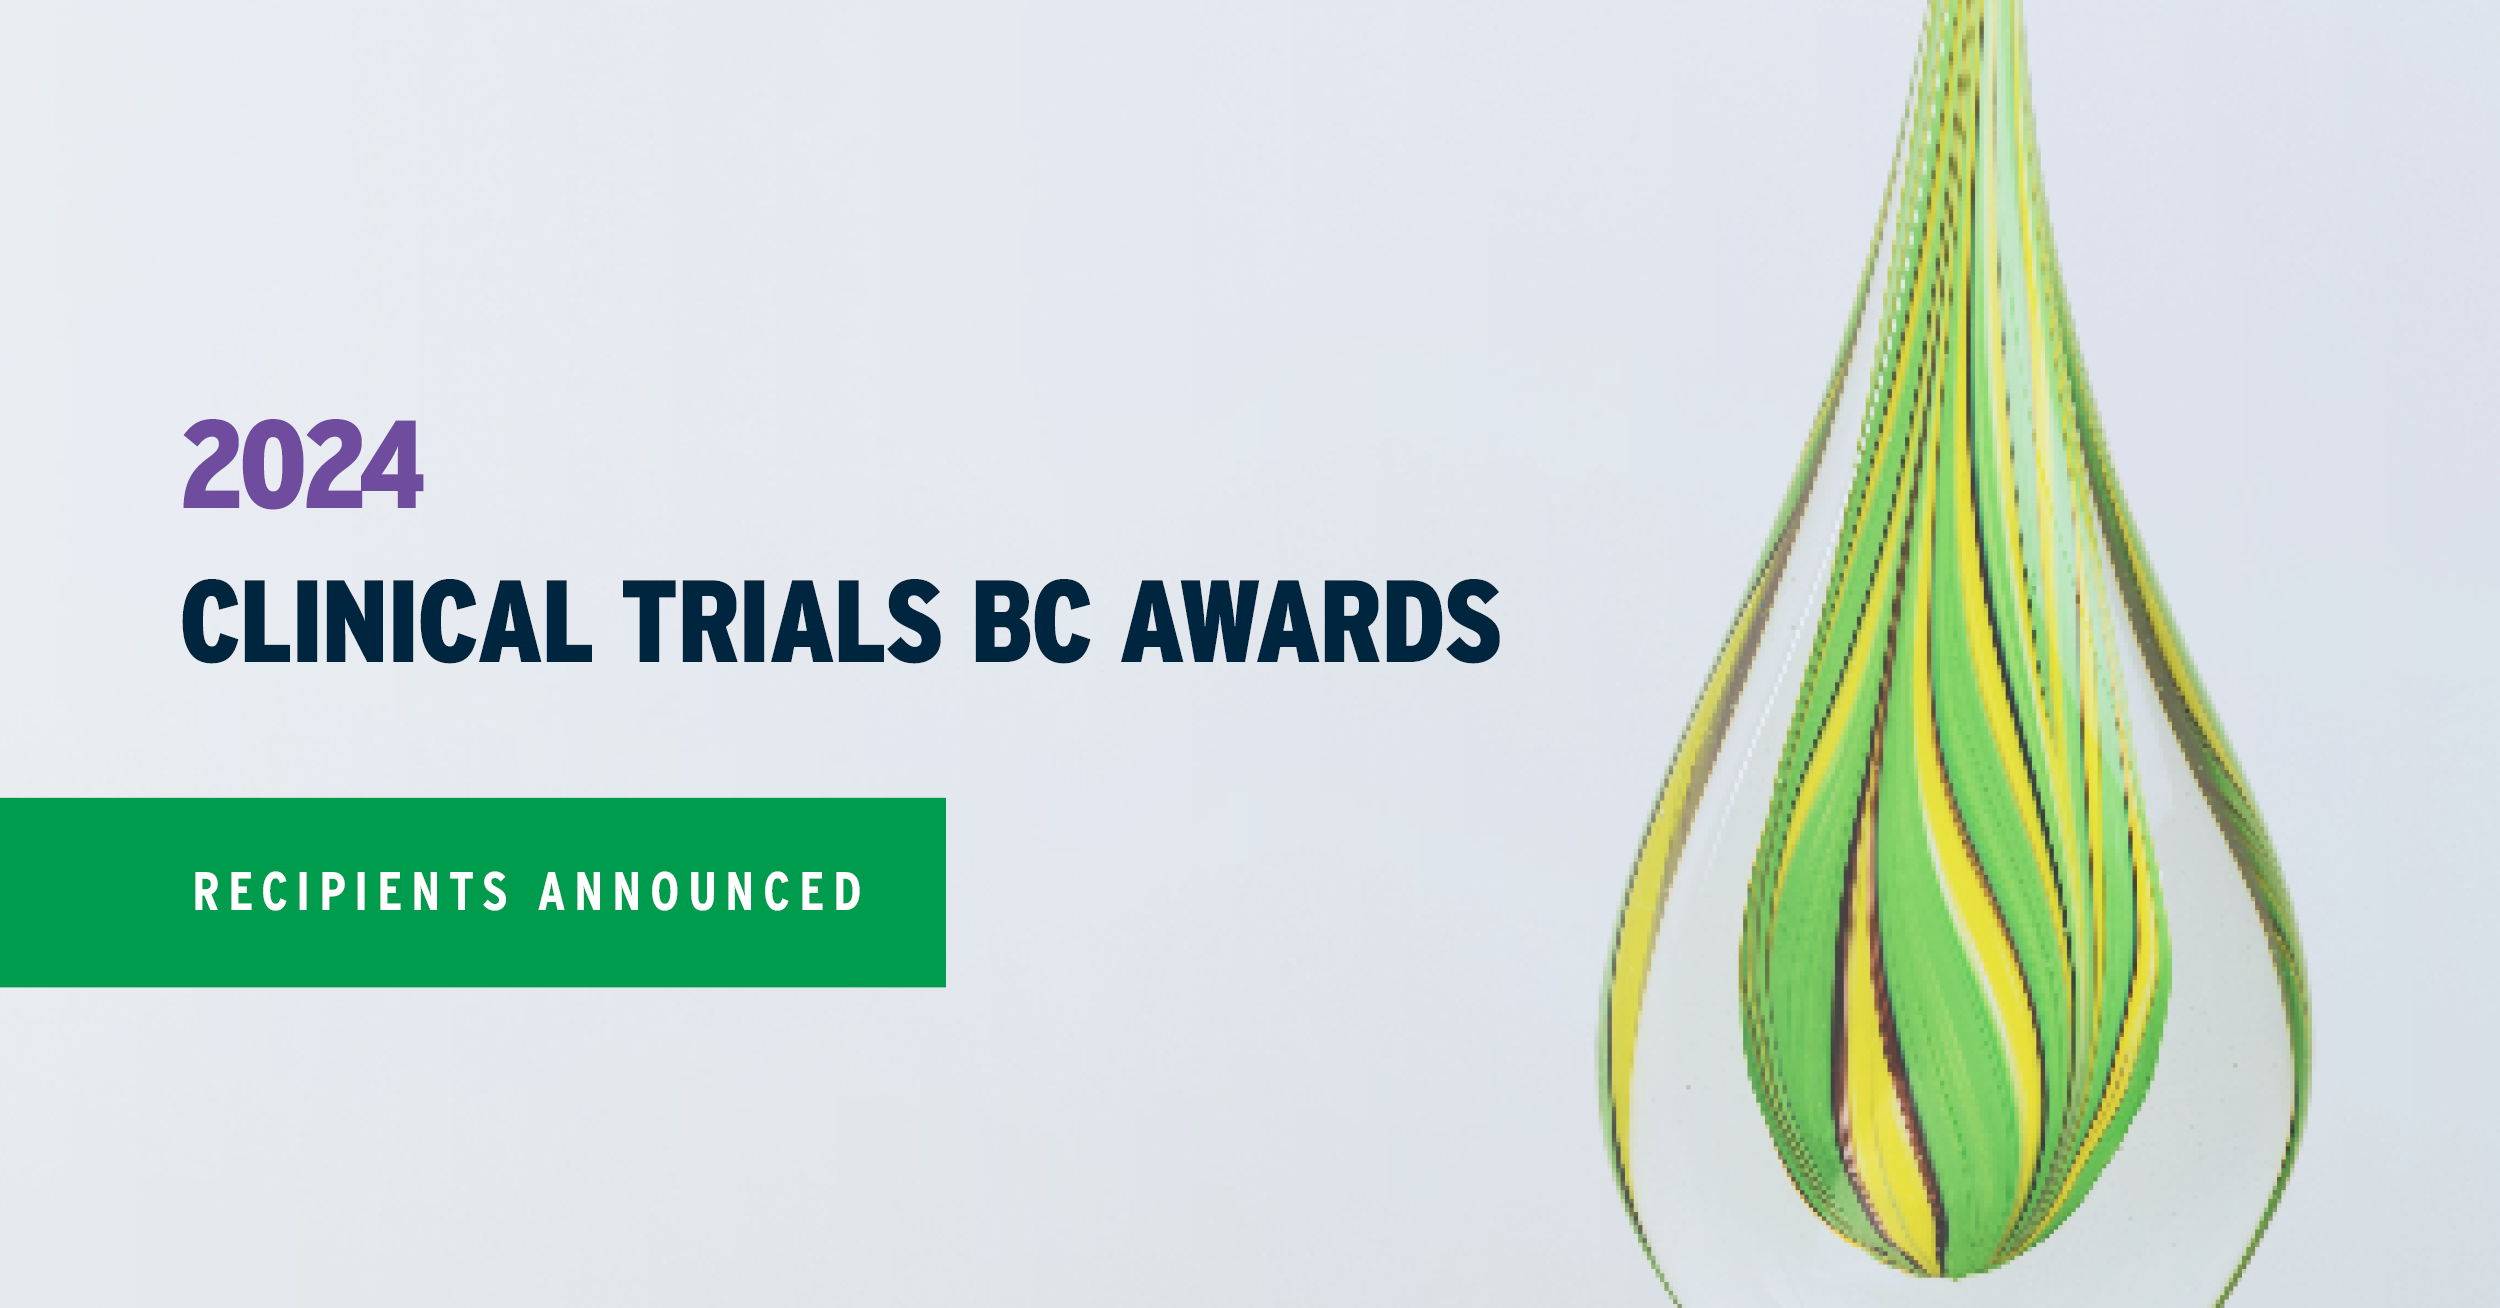 2024 Clinical Trials BC Awards, recipients announed.